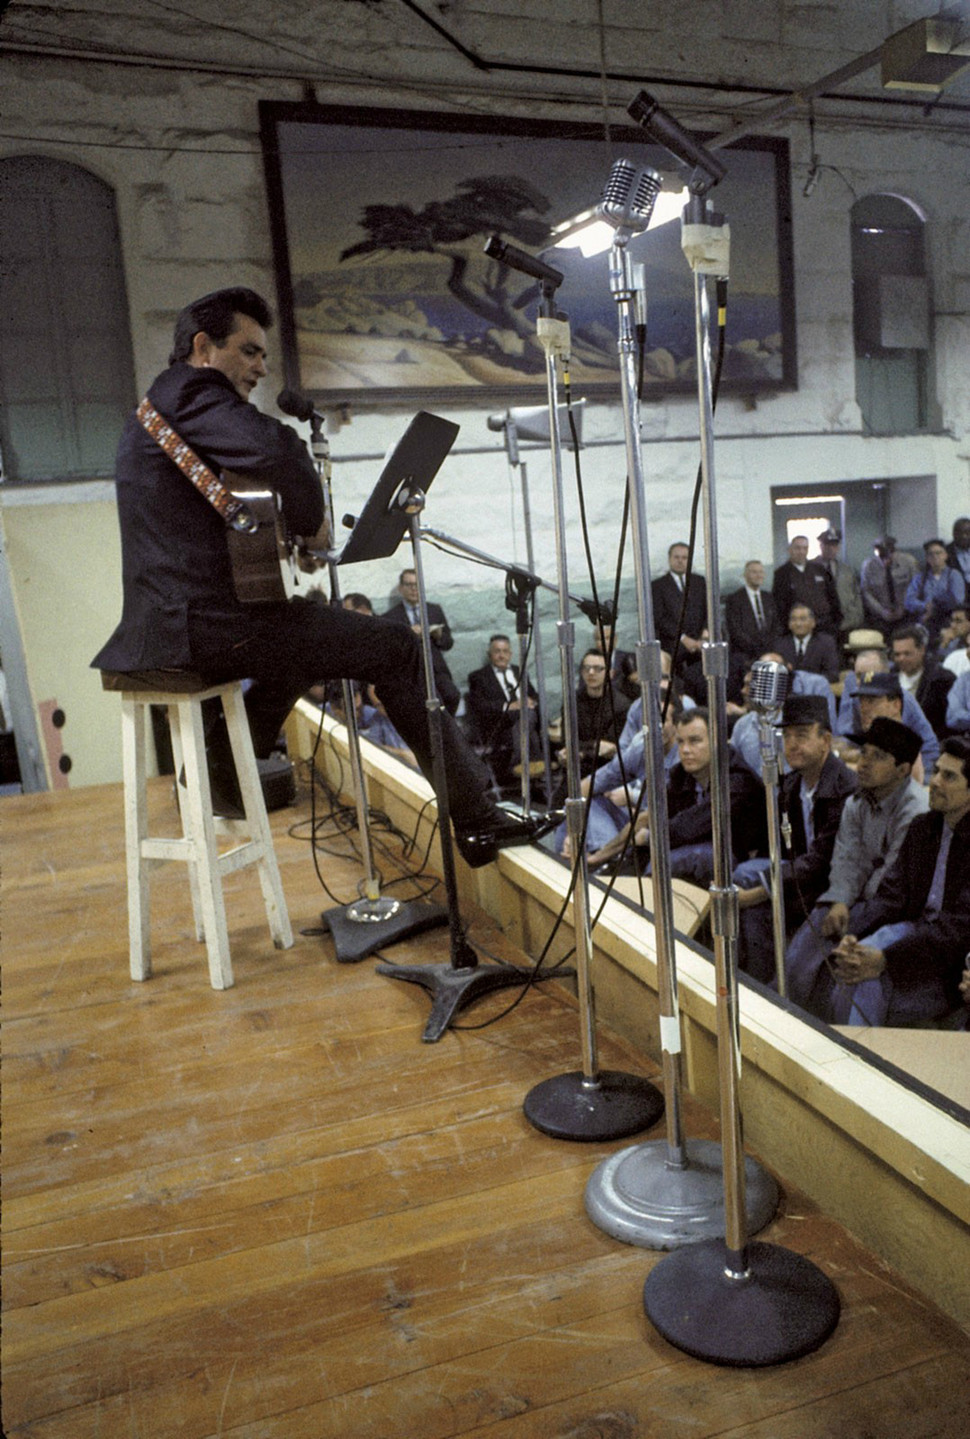 Johnny Cash performs at Folsom Prison.